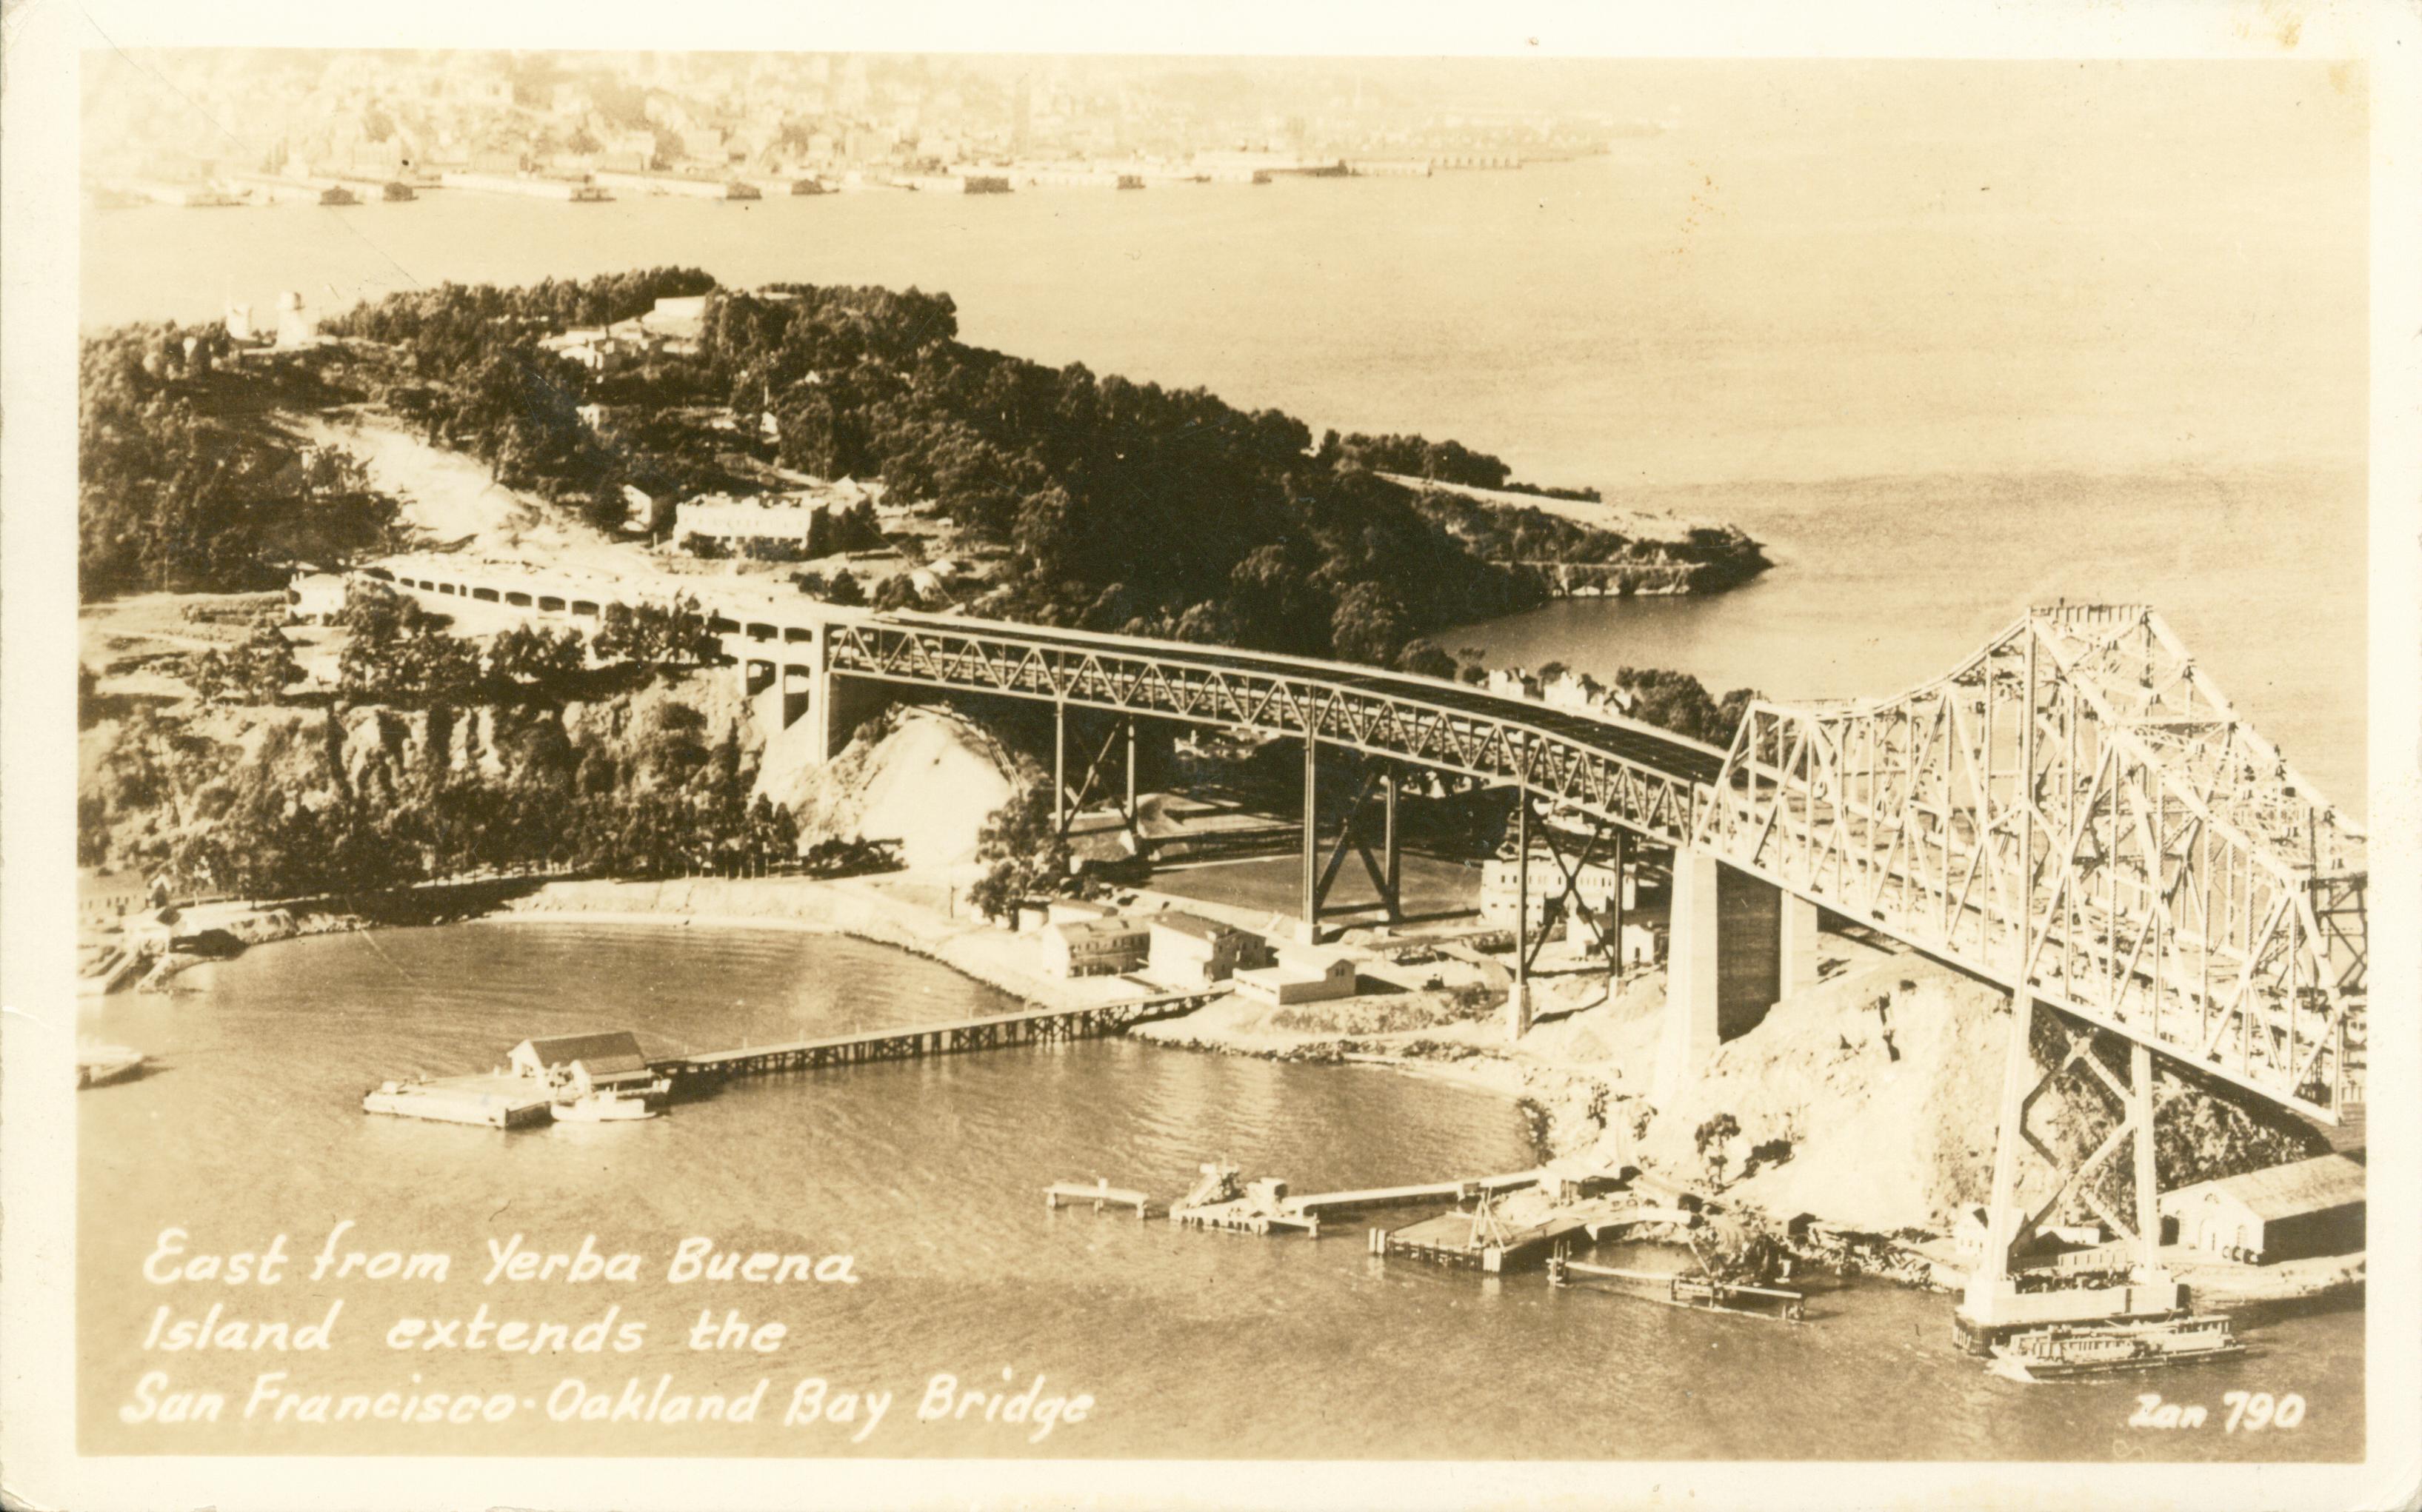 View of the San Francisco-Oakland Bay Bridge and Yerba Buena Island and San Francisco Bay